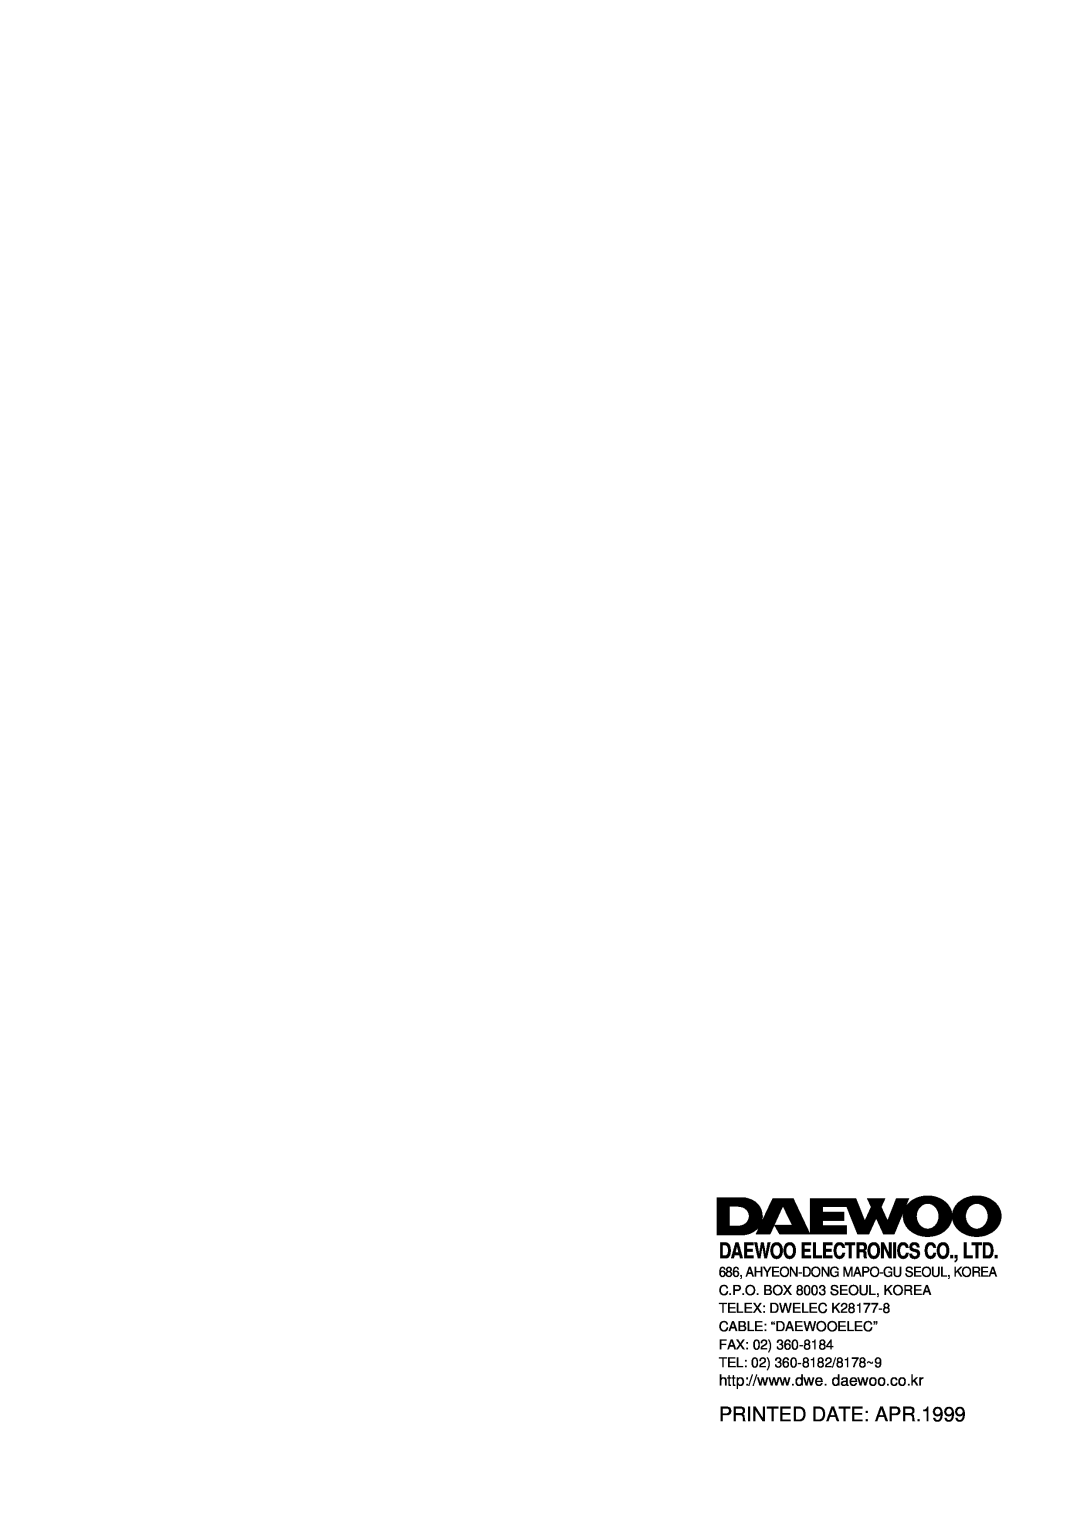 Daewoo DPB-280LH service manual PRINTED DATE APR.1999, Cable “Daewooelec” Fax, TEL 02 360-8182/8178~9 